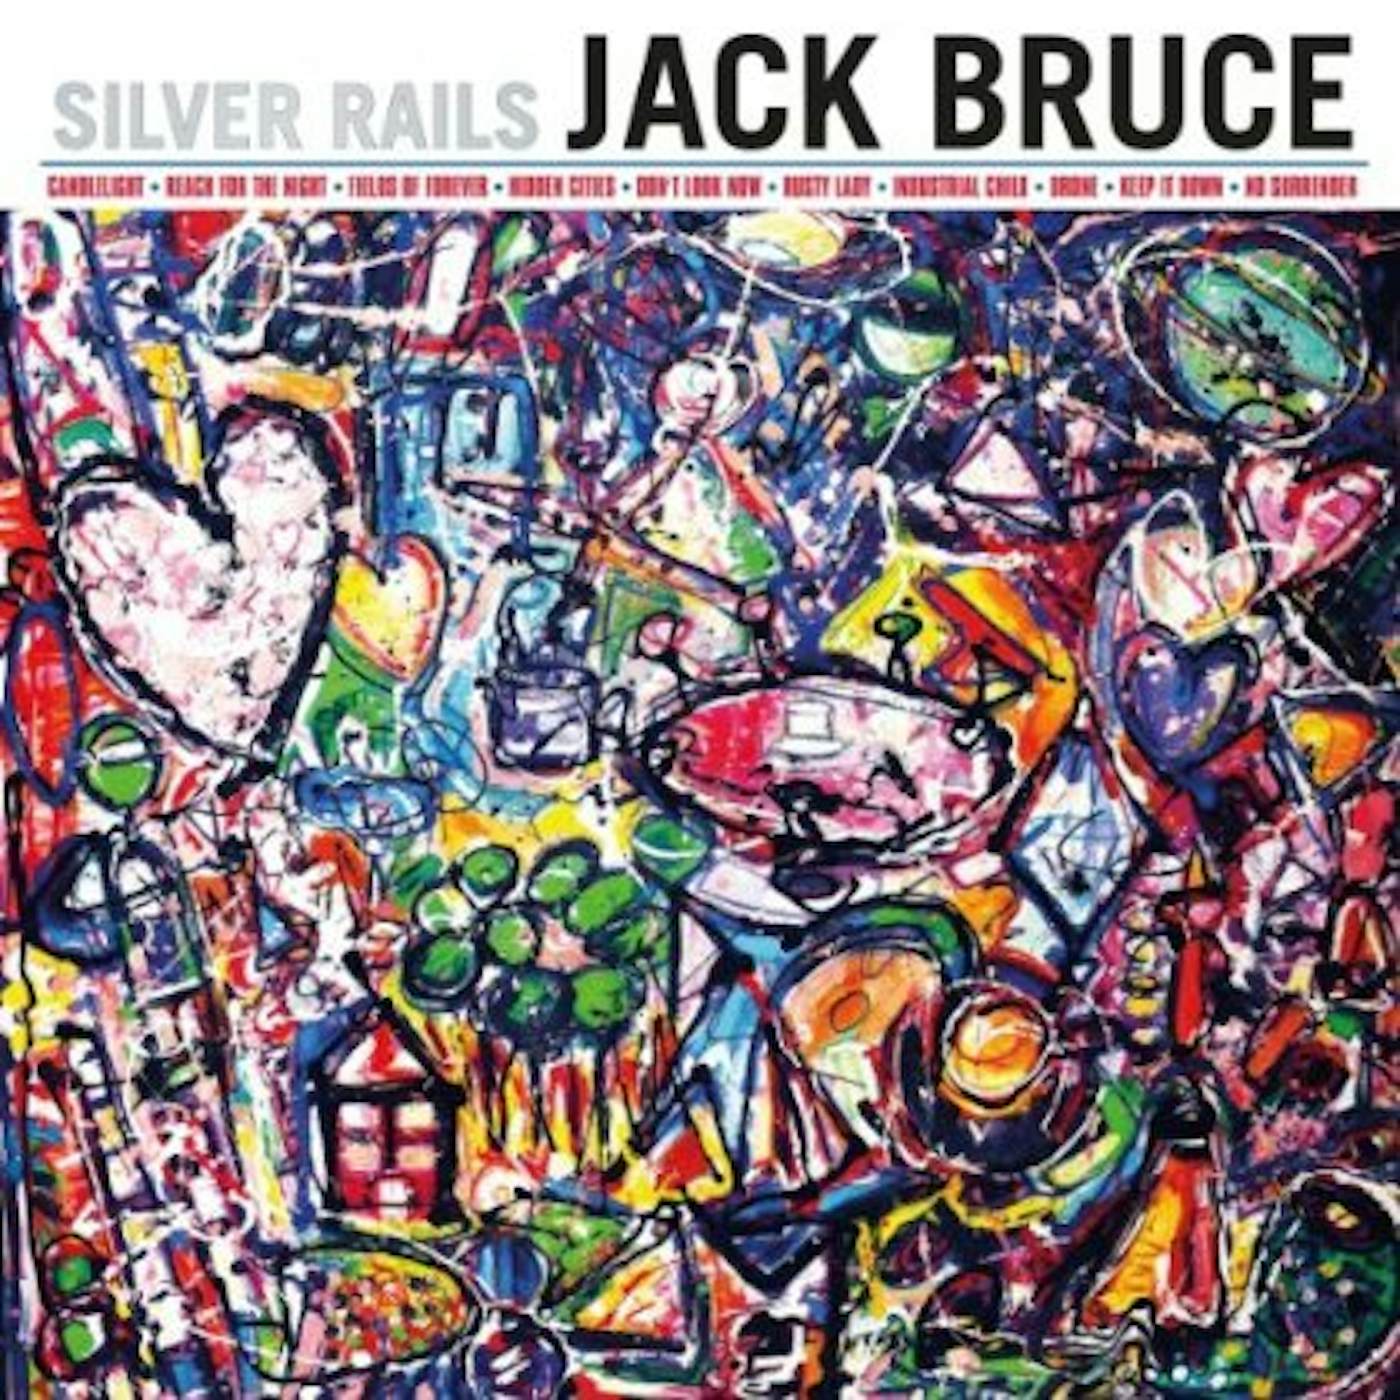 Jack Bruce SILVER RAILS CD